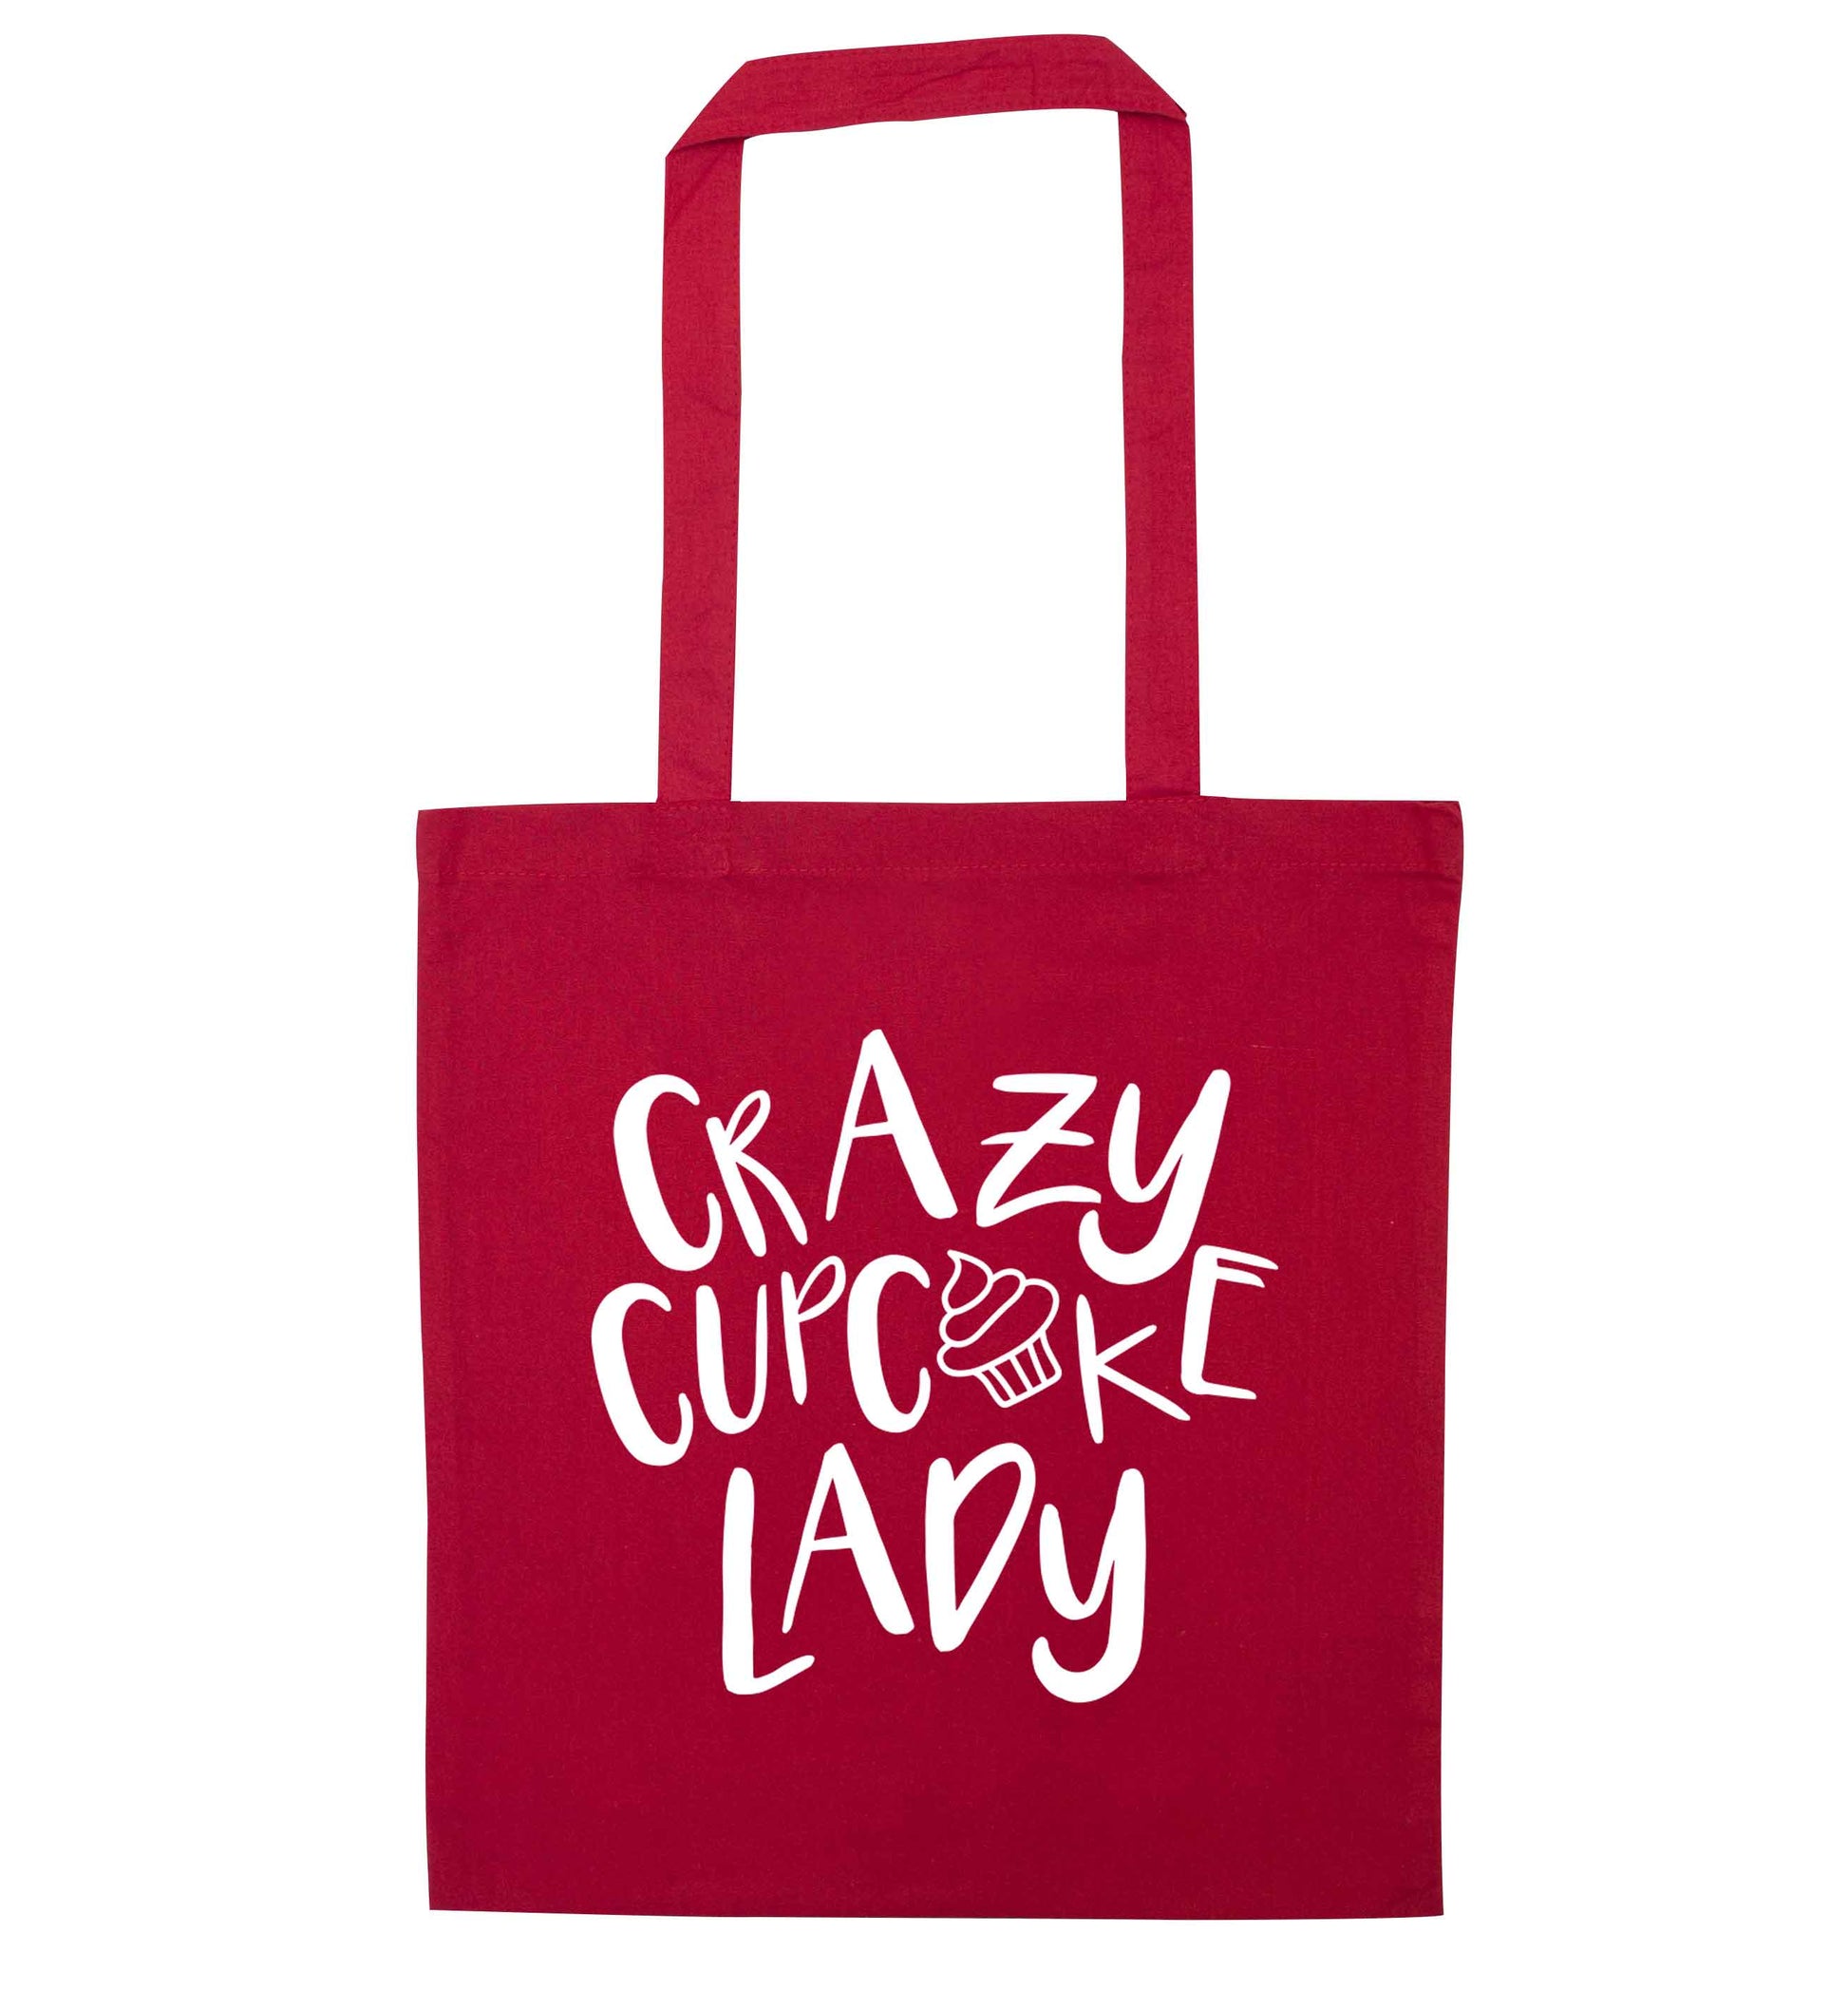 Crazy cupcake lady red tote bag